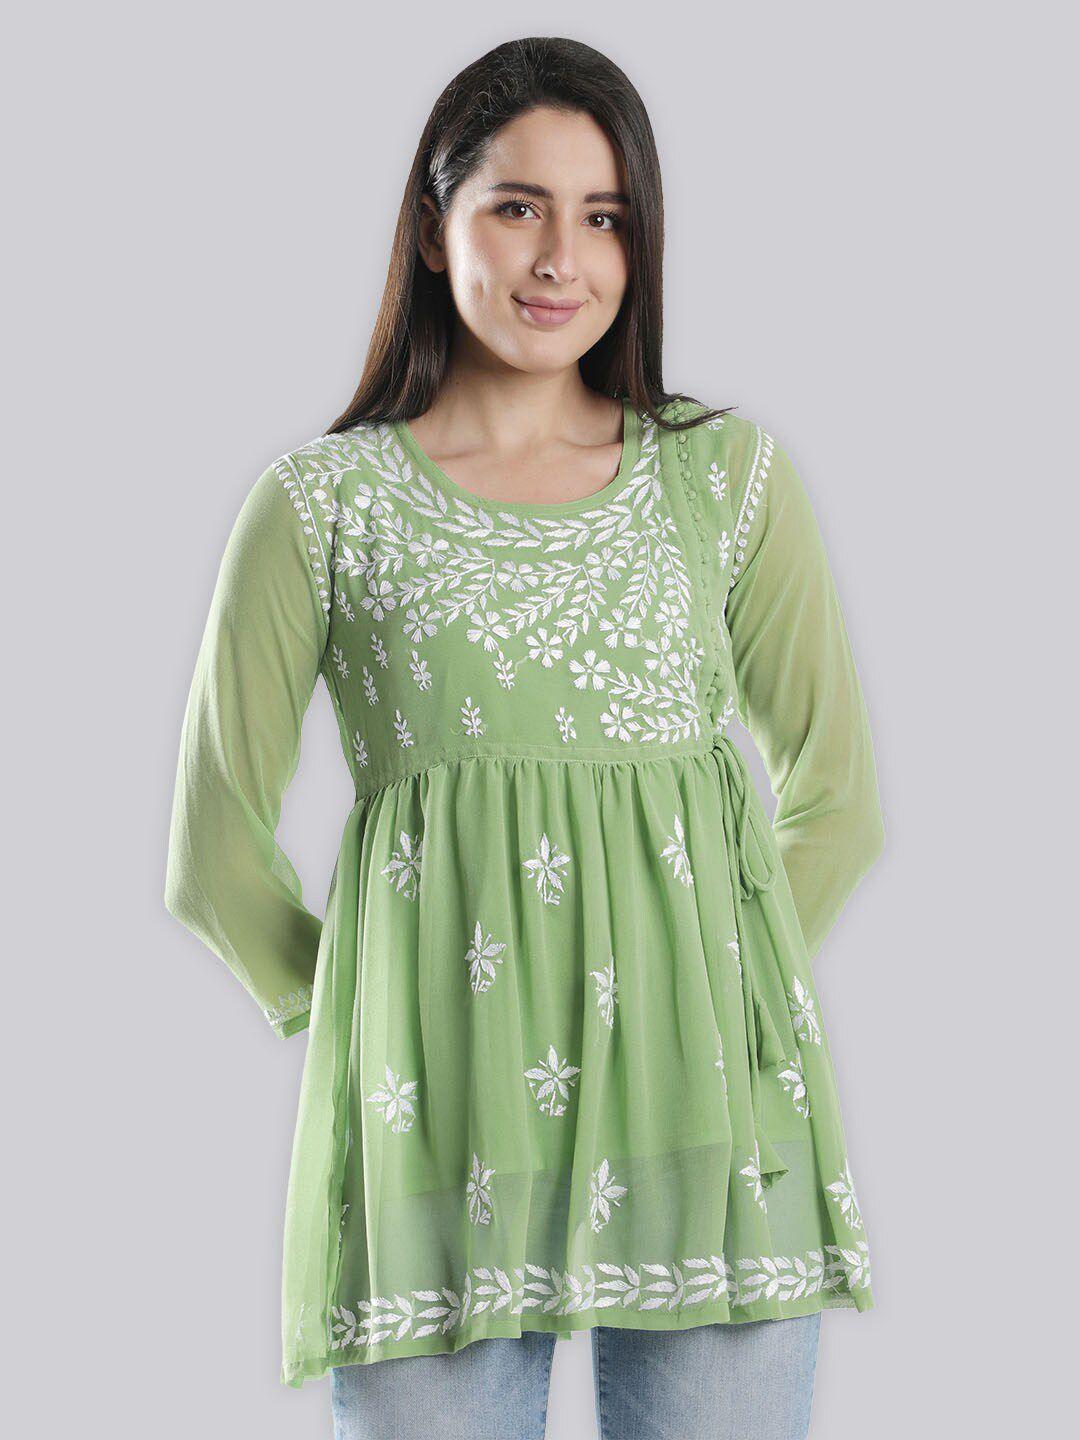 seva-chikan-green-&-white-ethnic-motifs-embroidered-chikankari-handloom-chikankari-angrakha-kurti